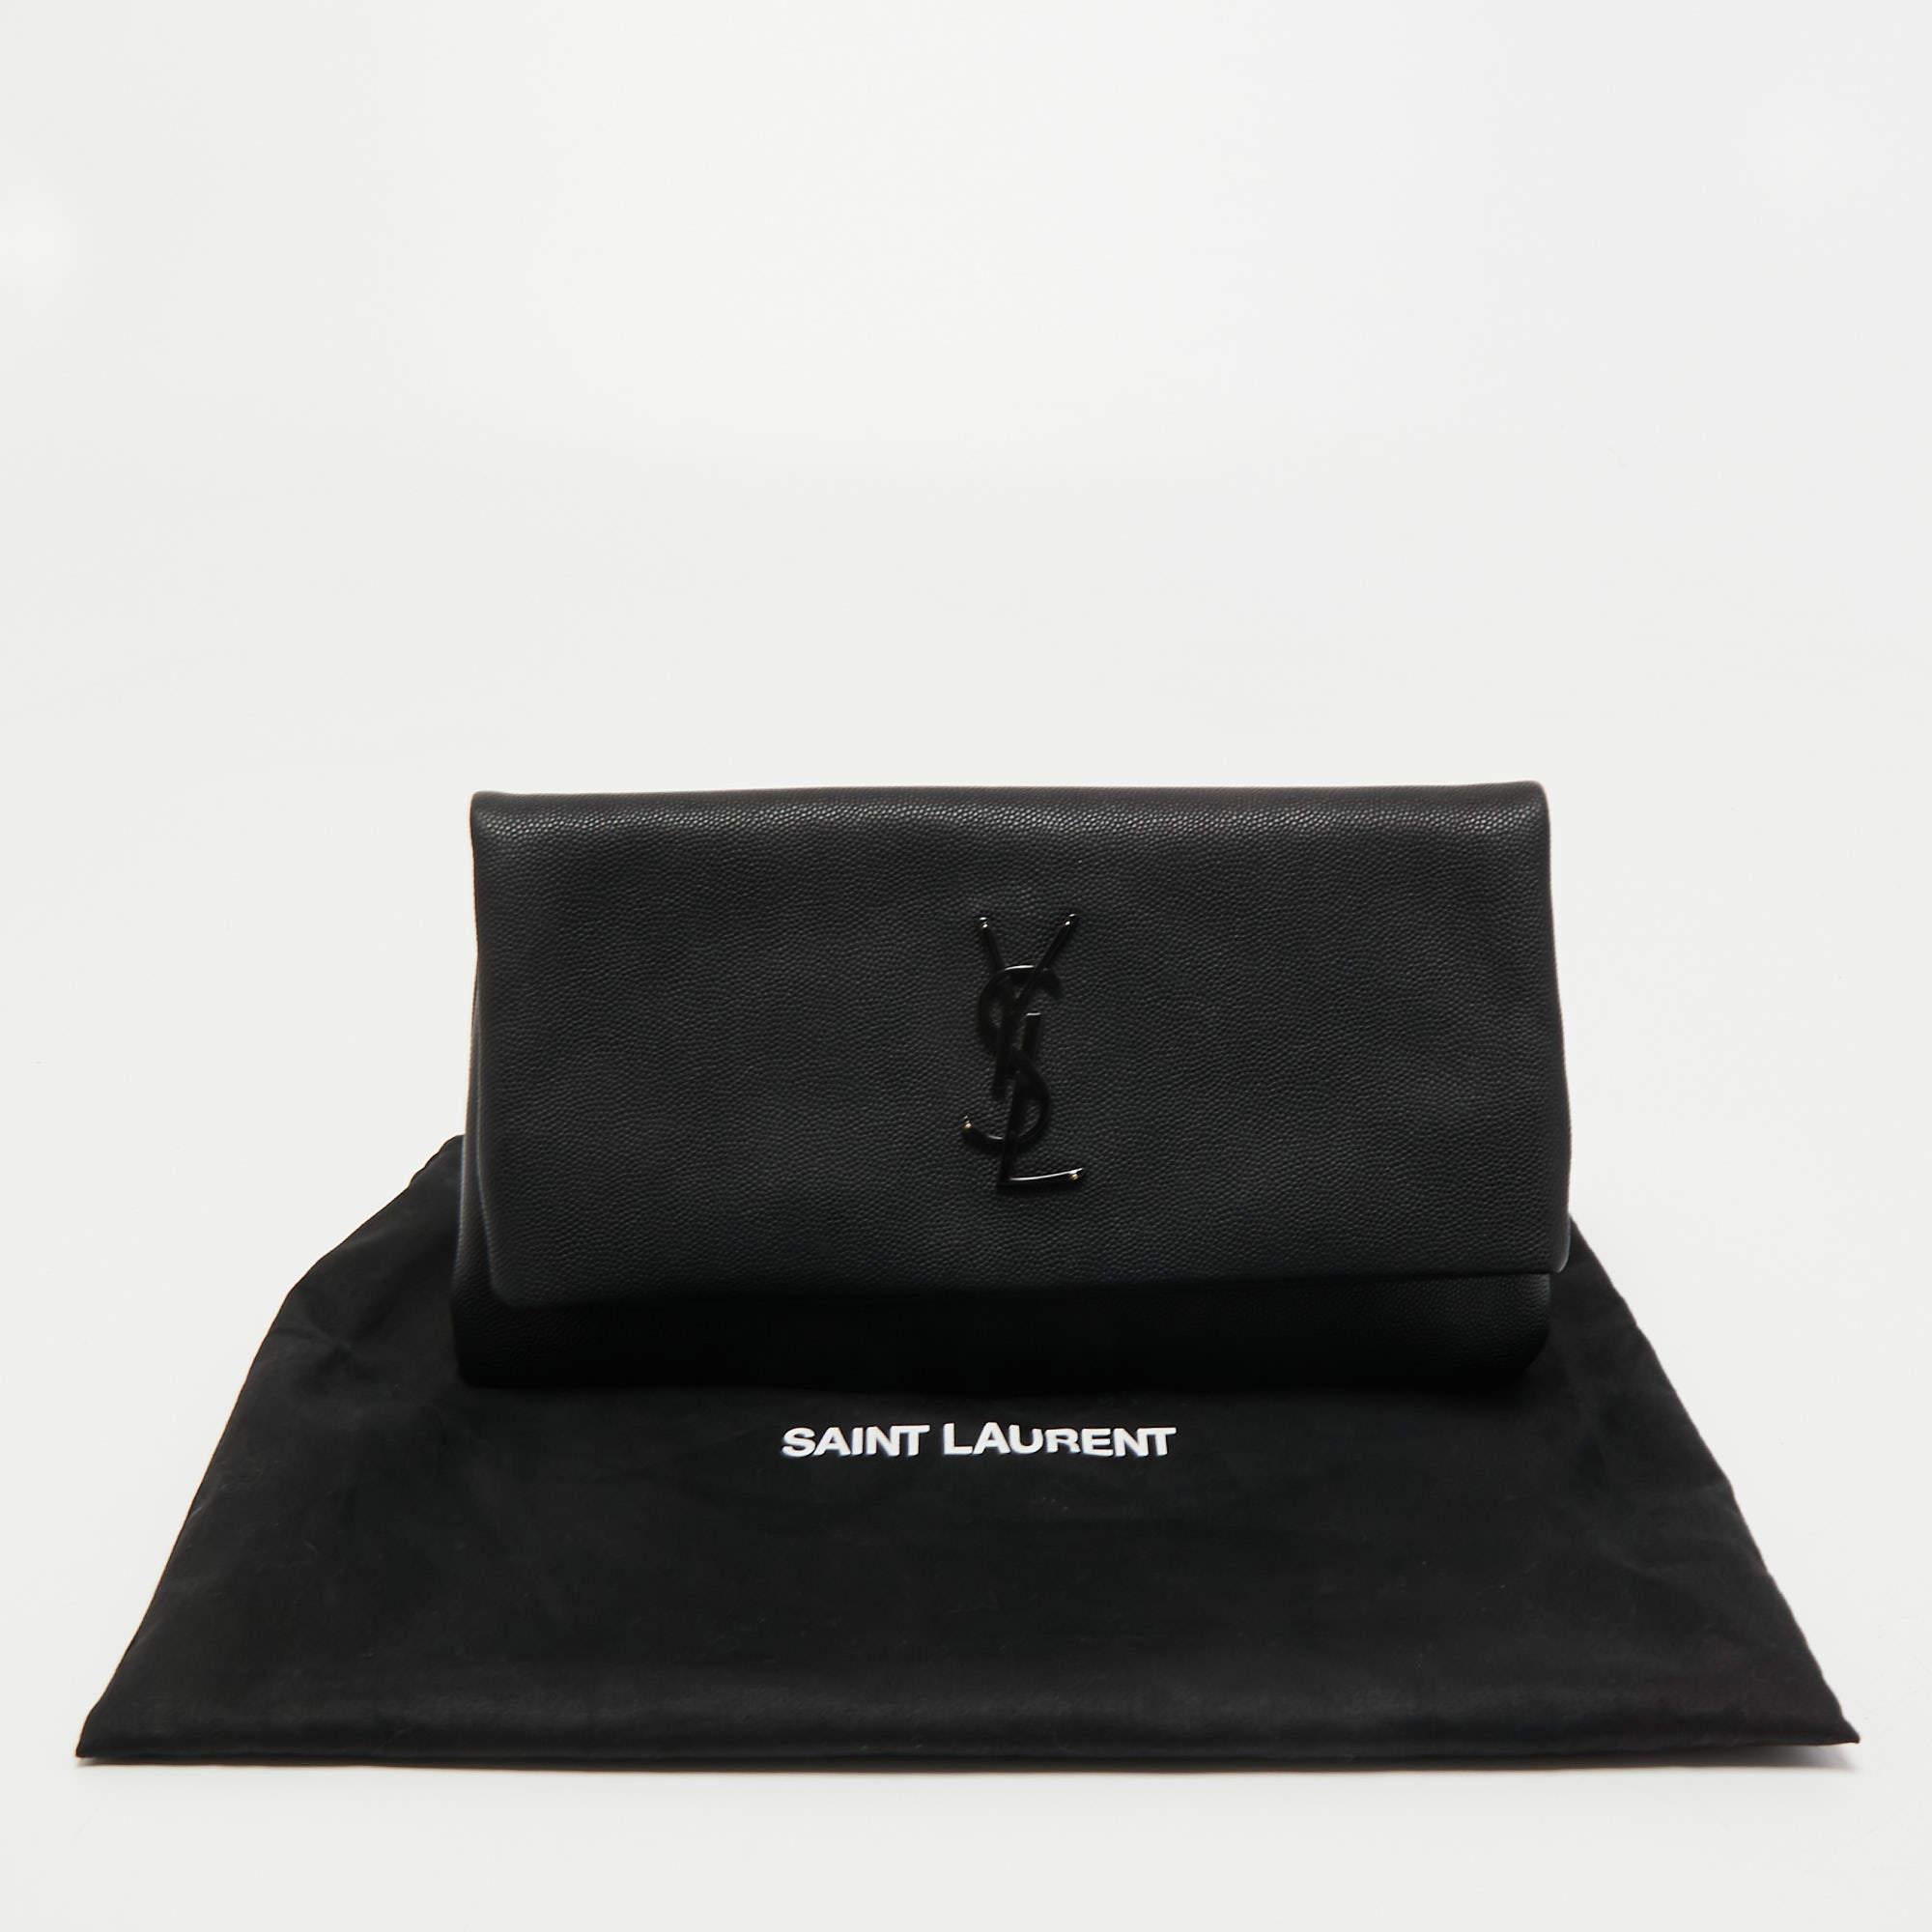 Saint Laurent Black Grain Leather West Hollywood Fold Over Clutch 8